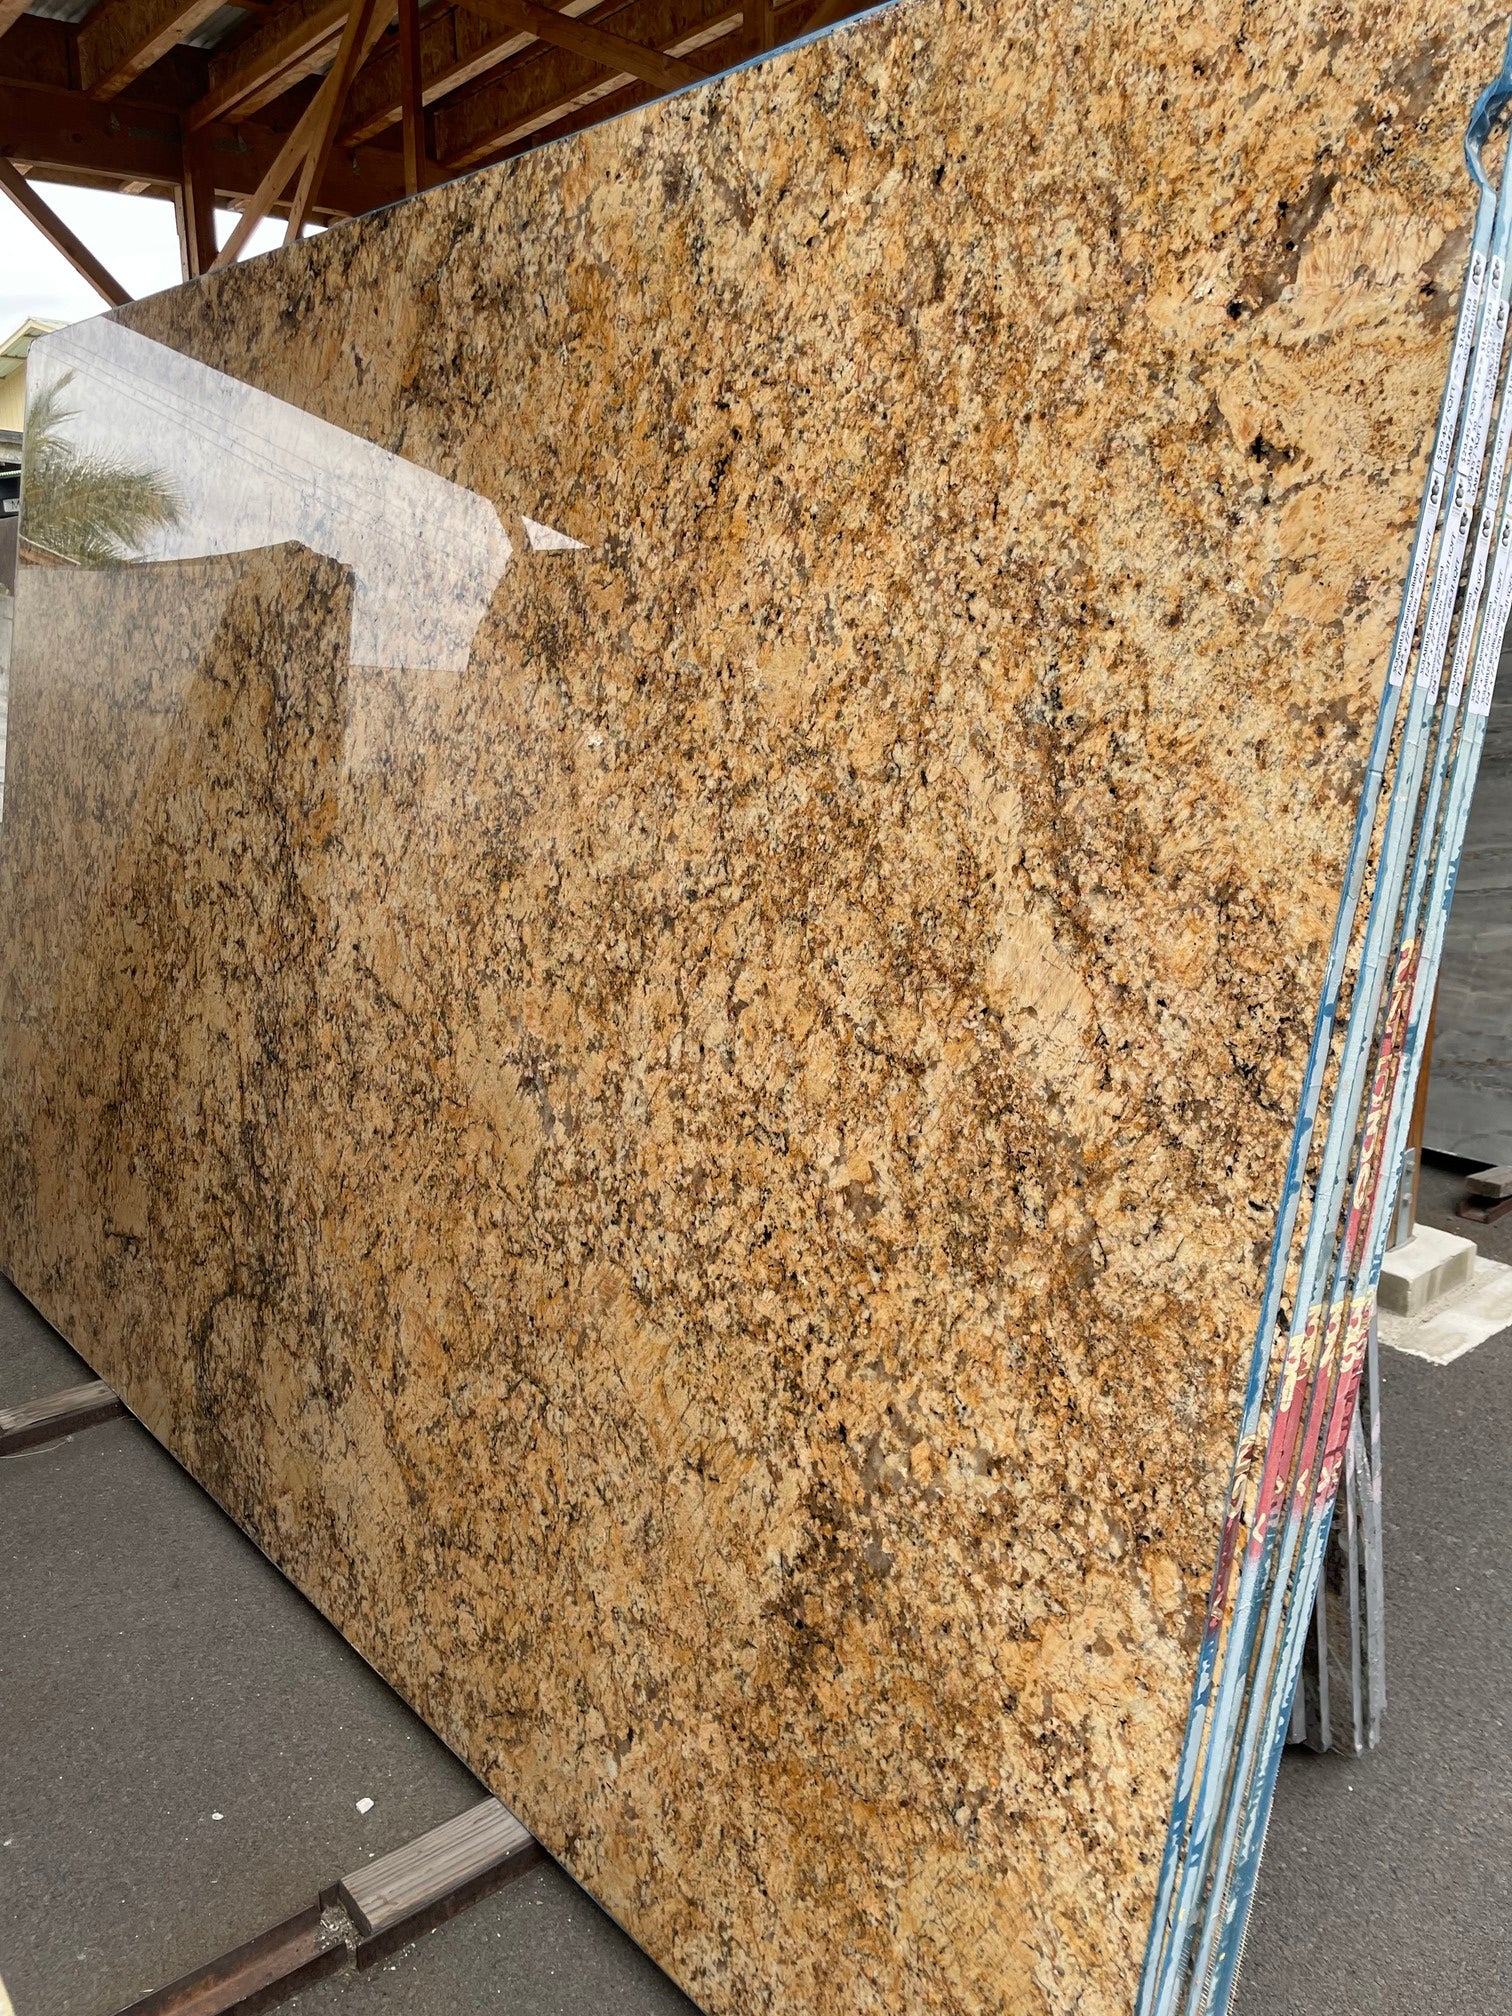 Granite-Slab-Countertops-SOLARIUS Granite polished 2cm thick- Stone Supplier - Rocks in Stock